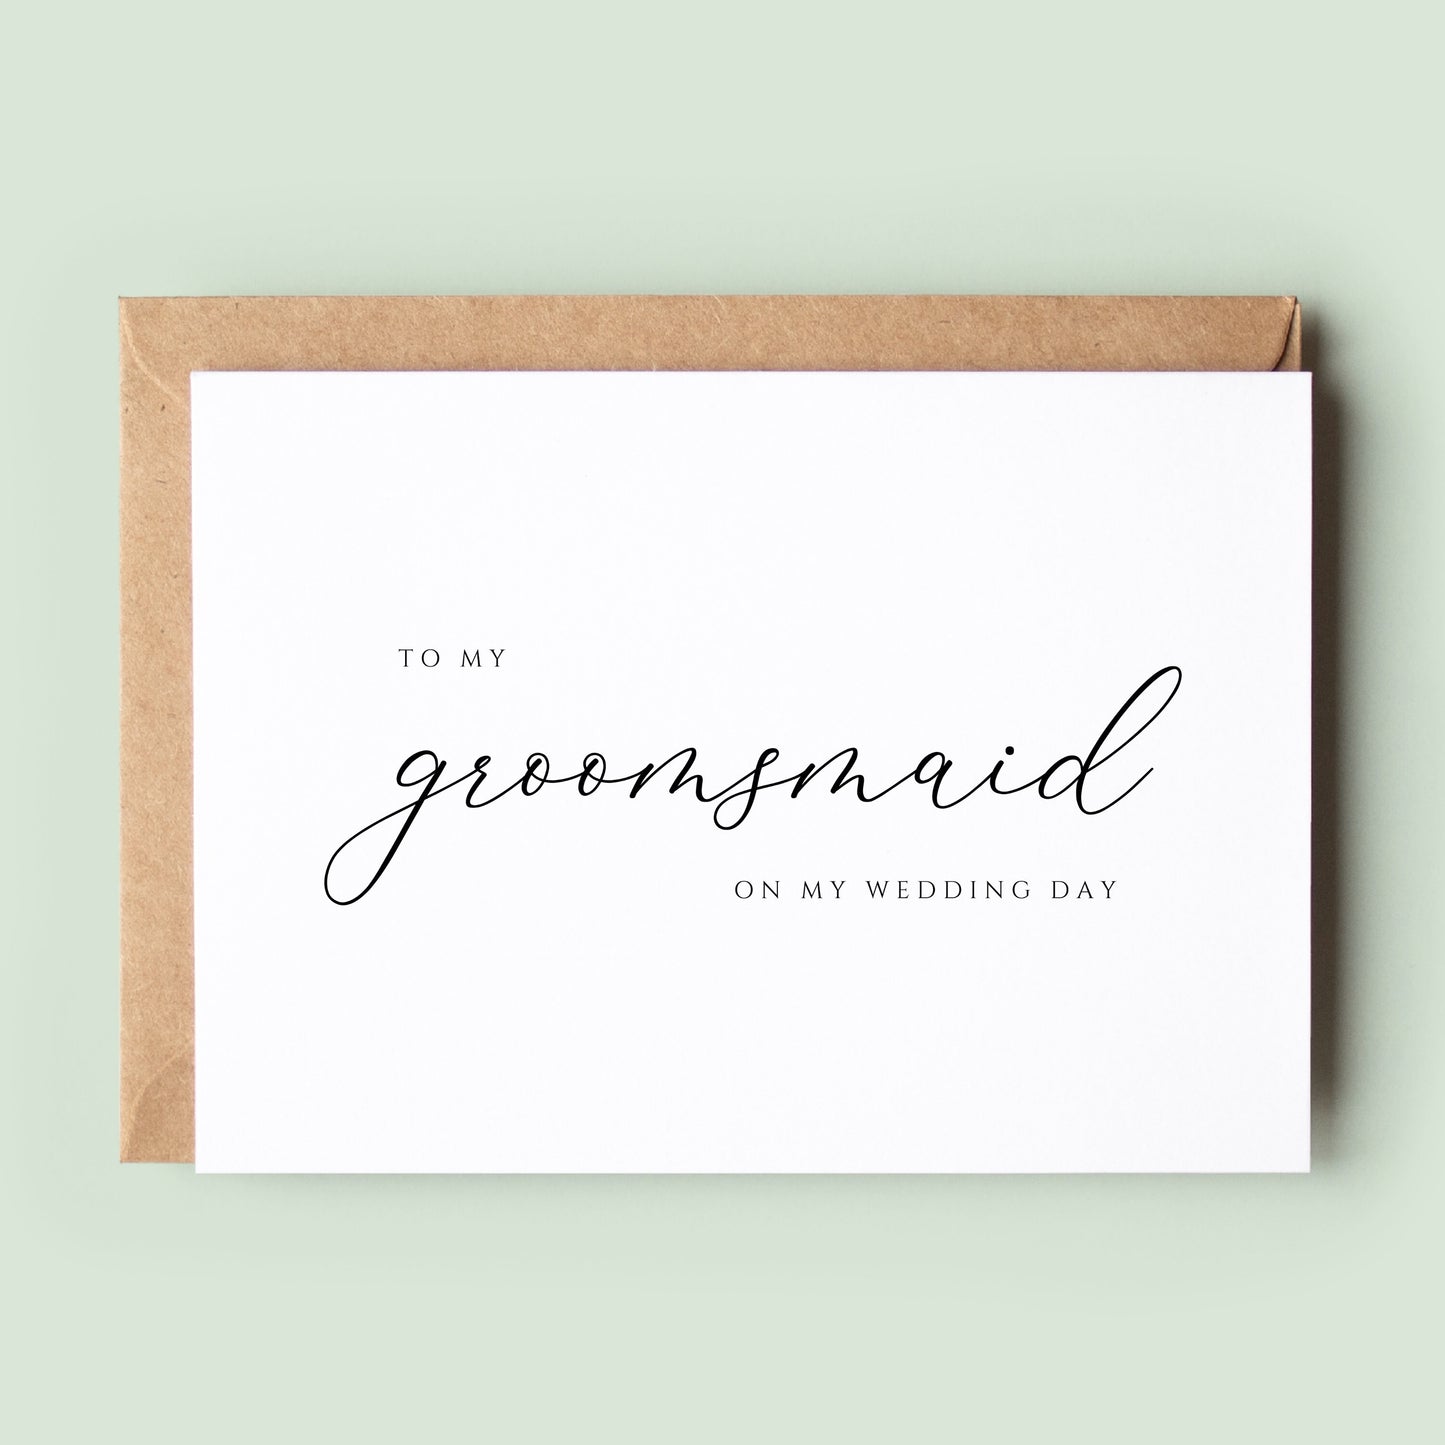 Classic To My Groomsmaid On My Wedding Day Card, Groomsmaid Thank You Card, Groomsmaid Wedding Card, Card To Groomsmaid, Greeting Card